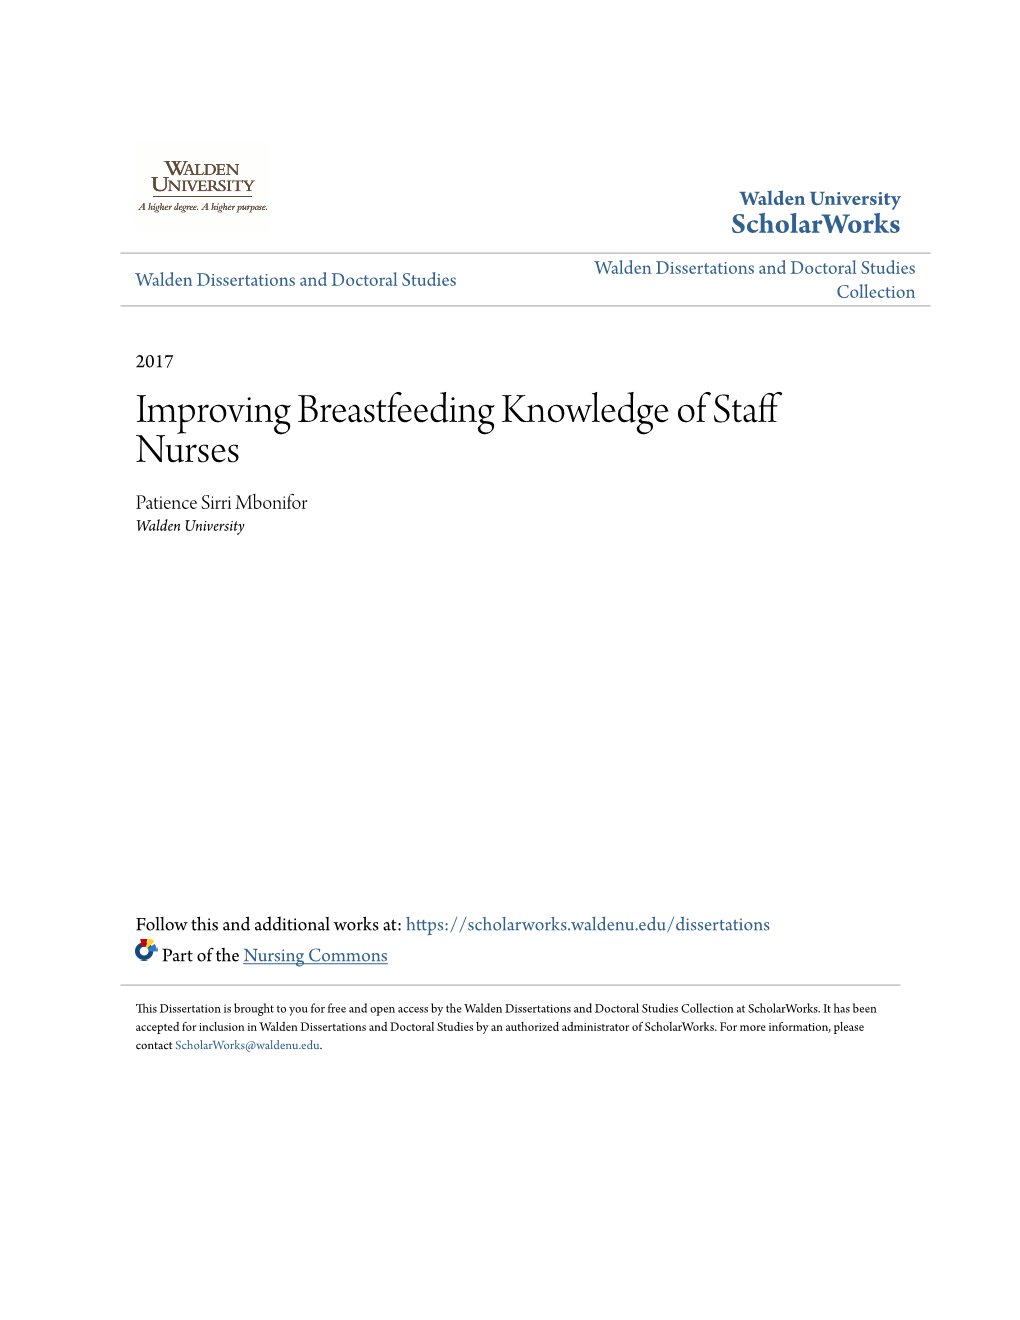 Improving Breastfeeding Knowledge of Staff Nurses Patience Sirri Mbonifor Walden University